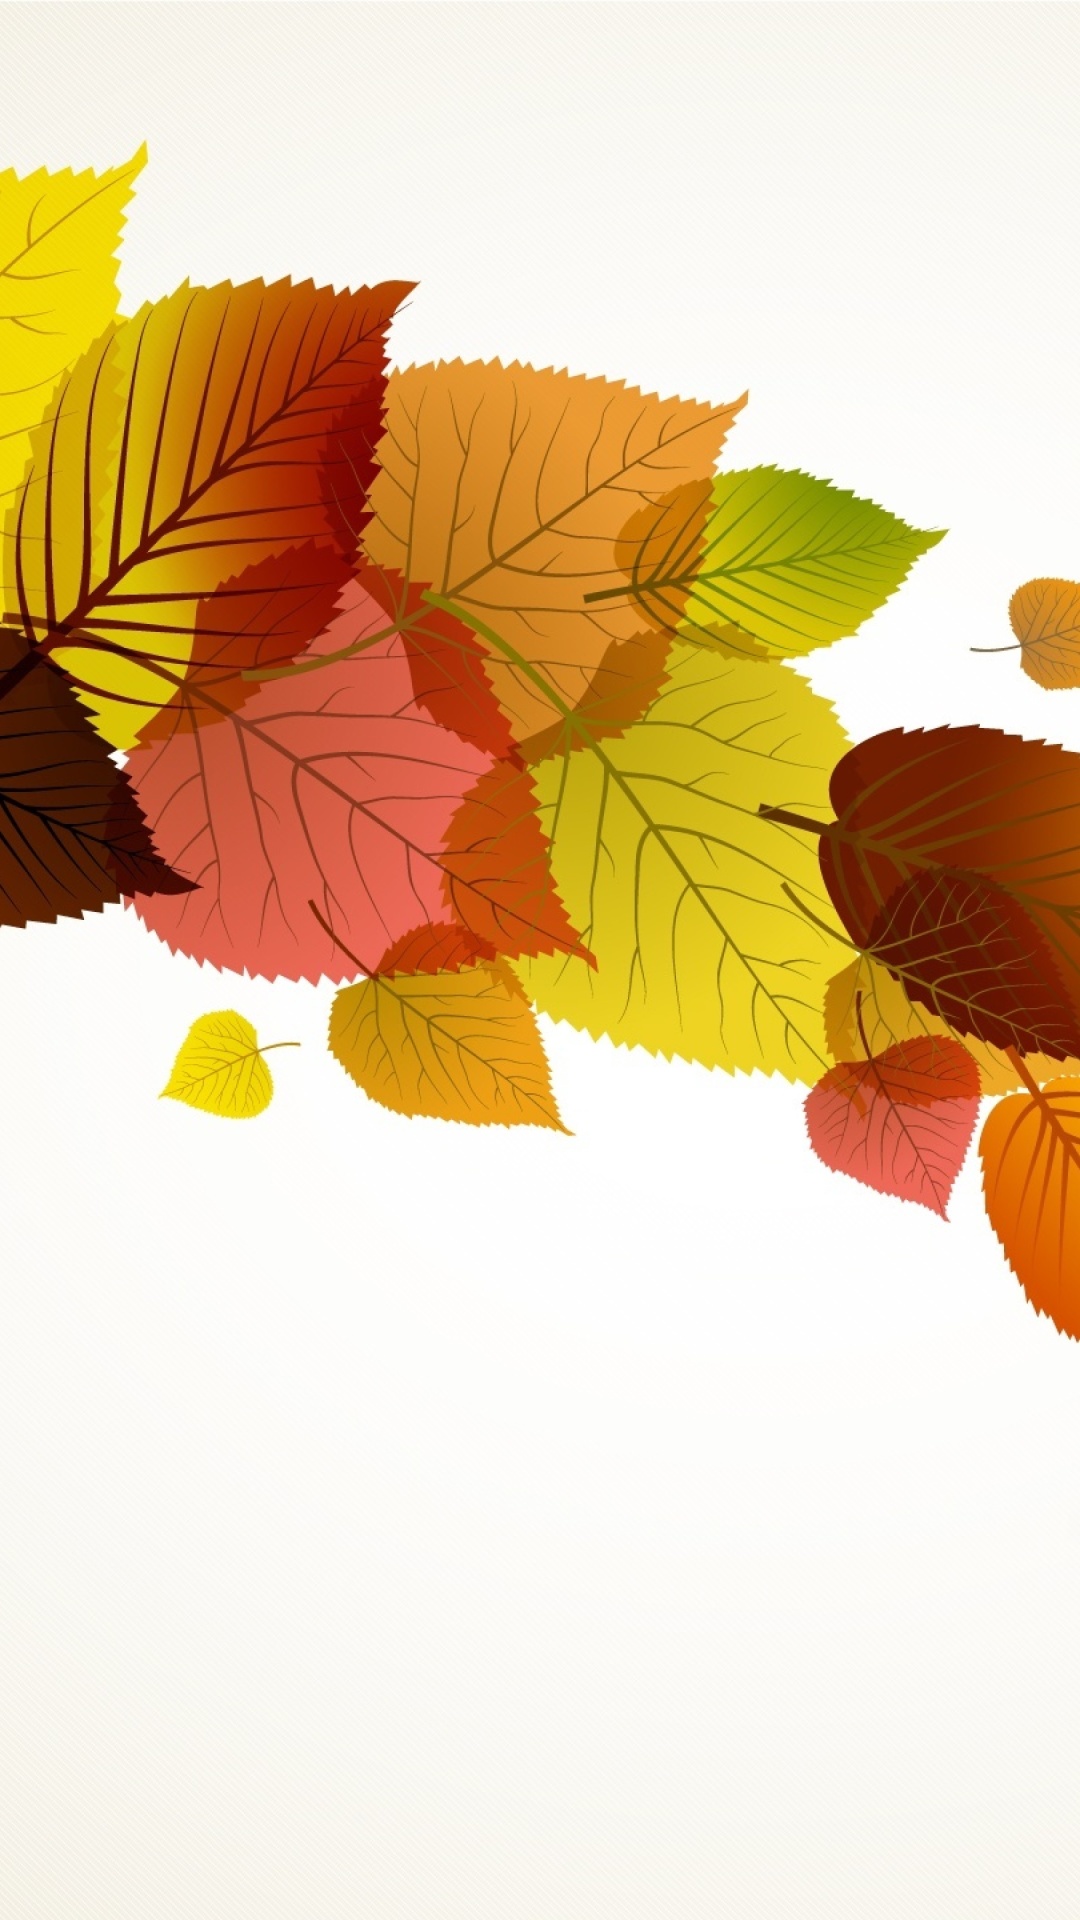 Drawn autumn leaves screenshot #1 1080x1920